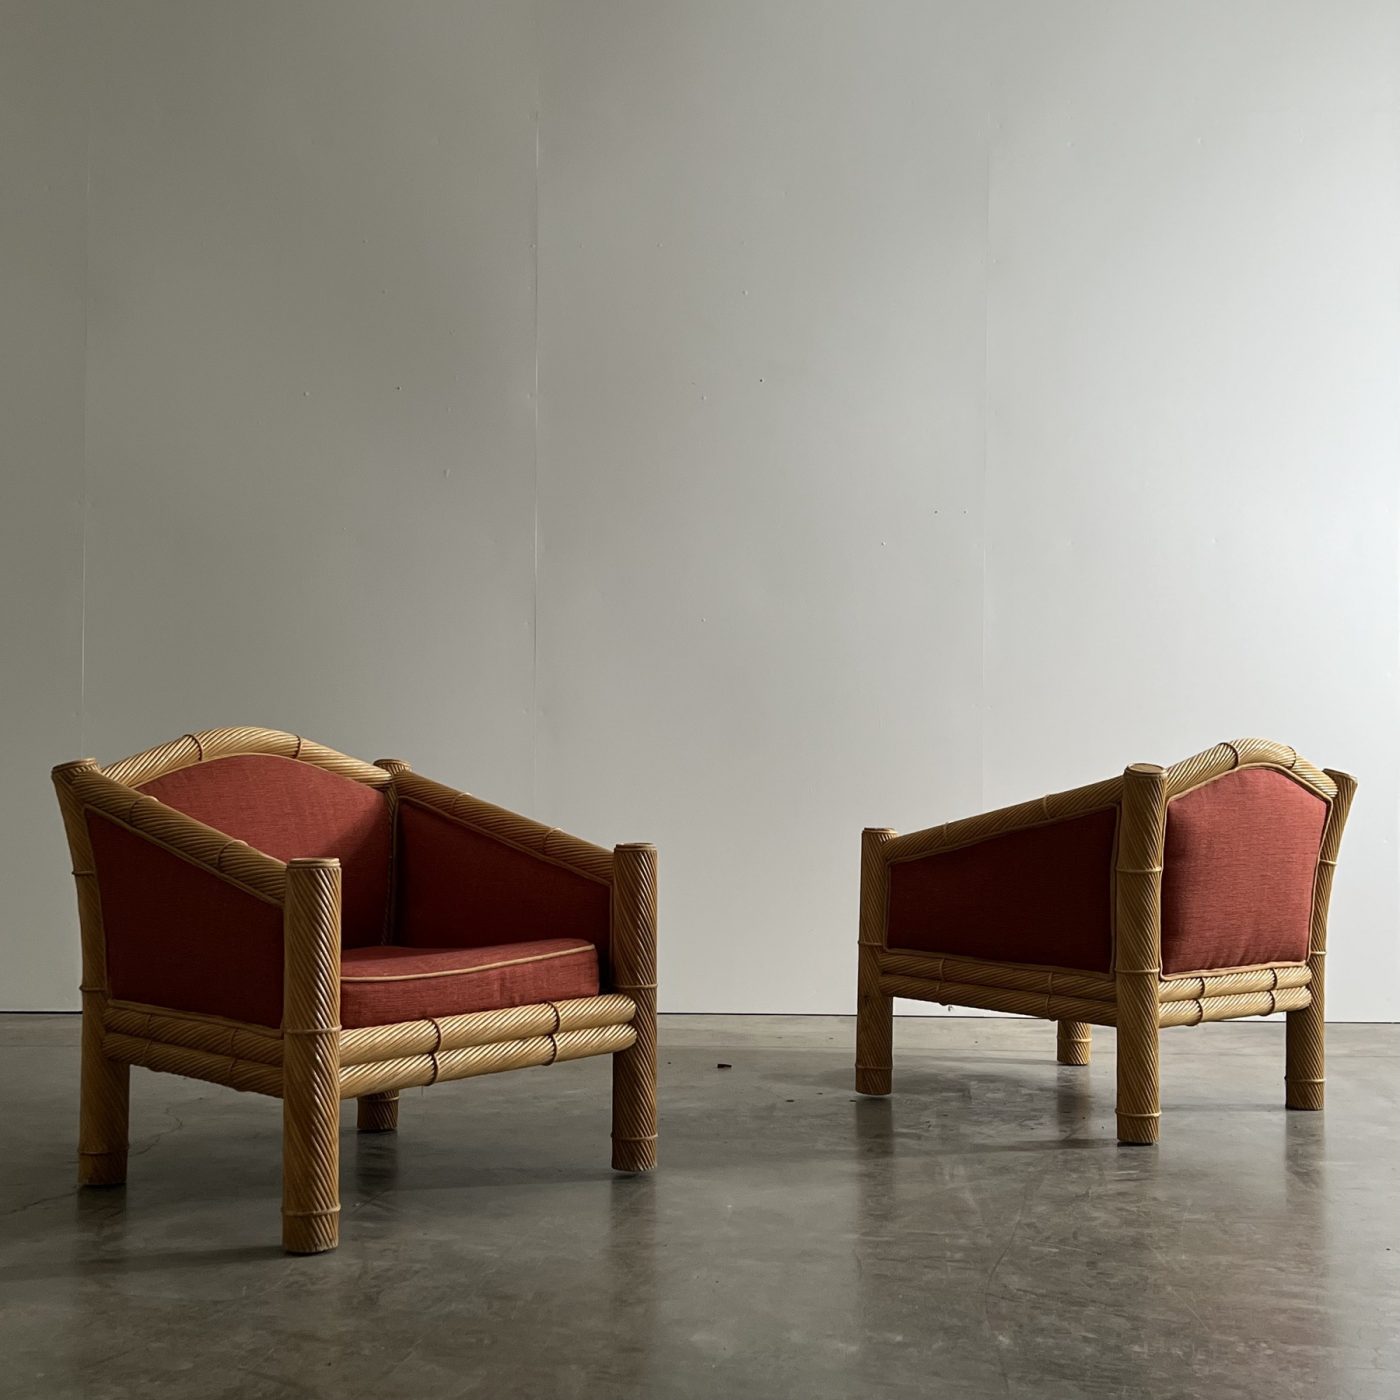 objet-vagabond-rattan-armchairs0008